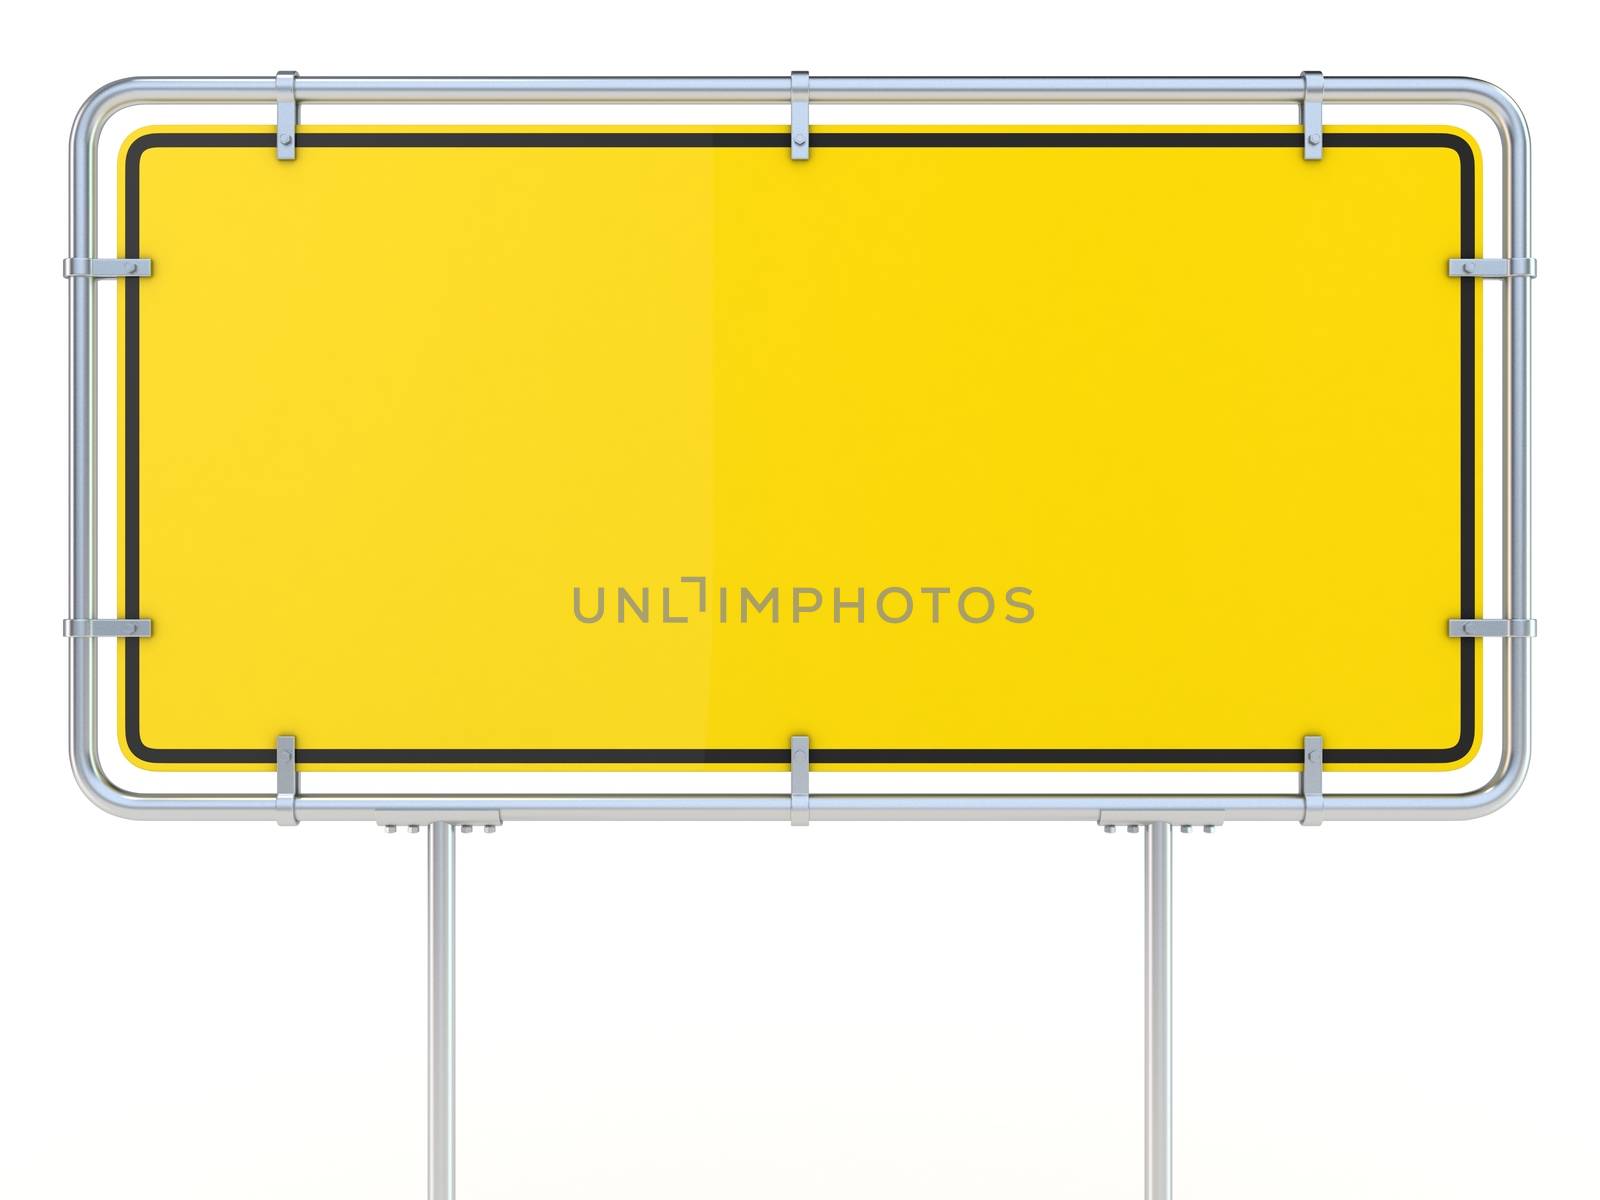 Blank framed traffic road sign standing. 3D render illustration isolated on white background